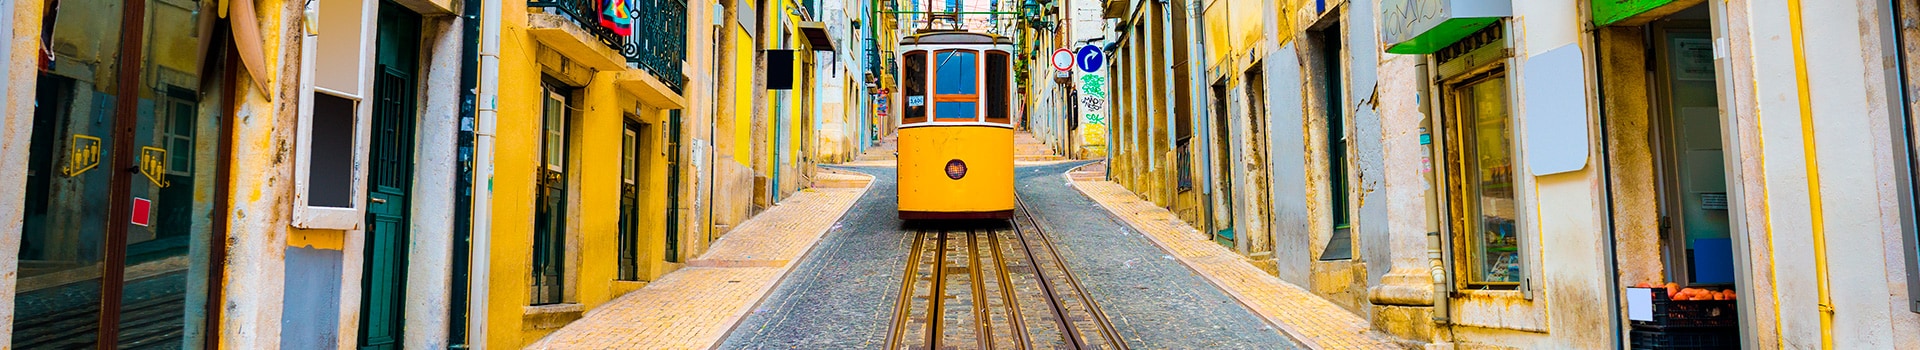 Malaga - Lissabon